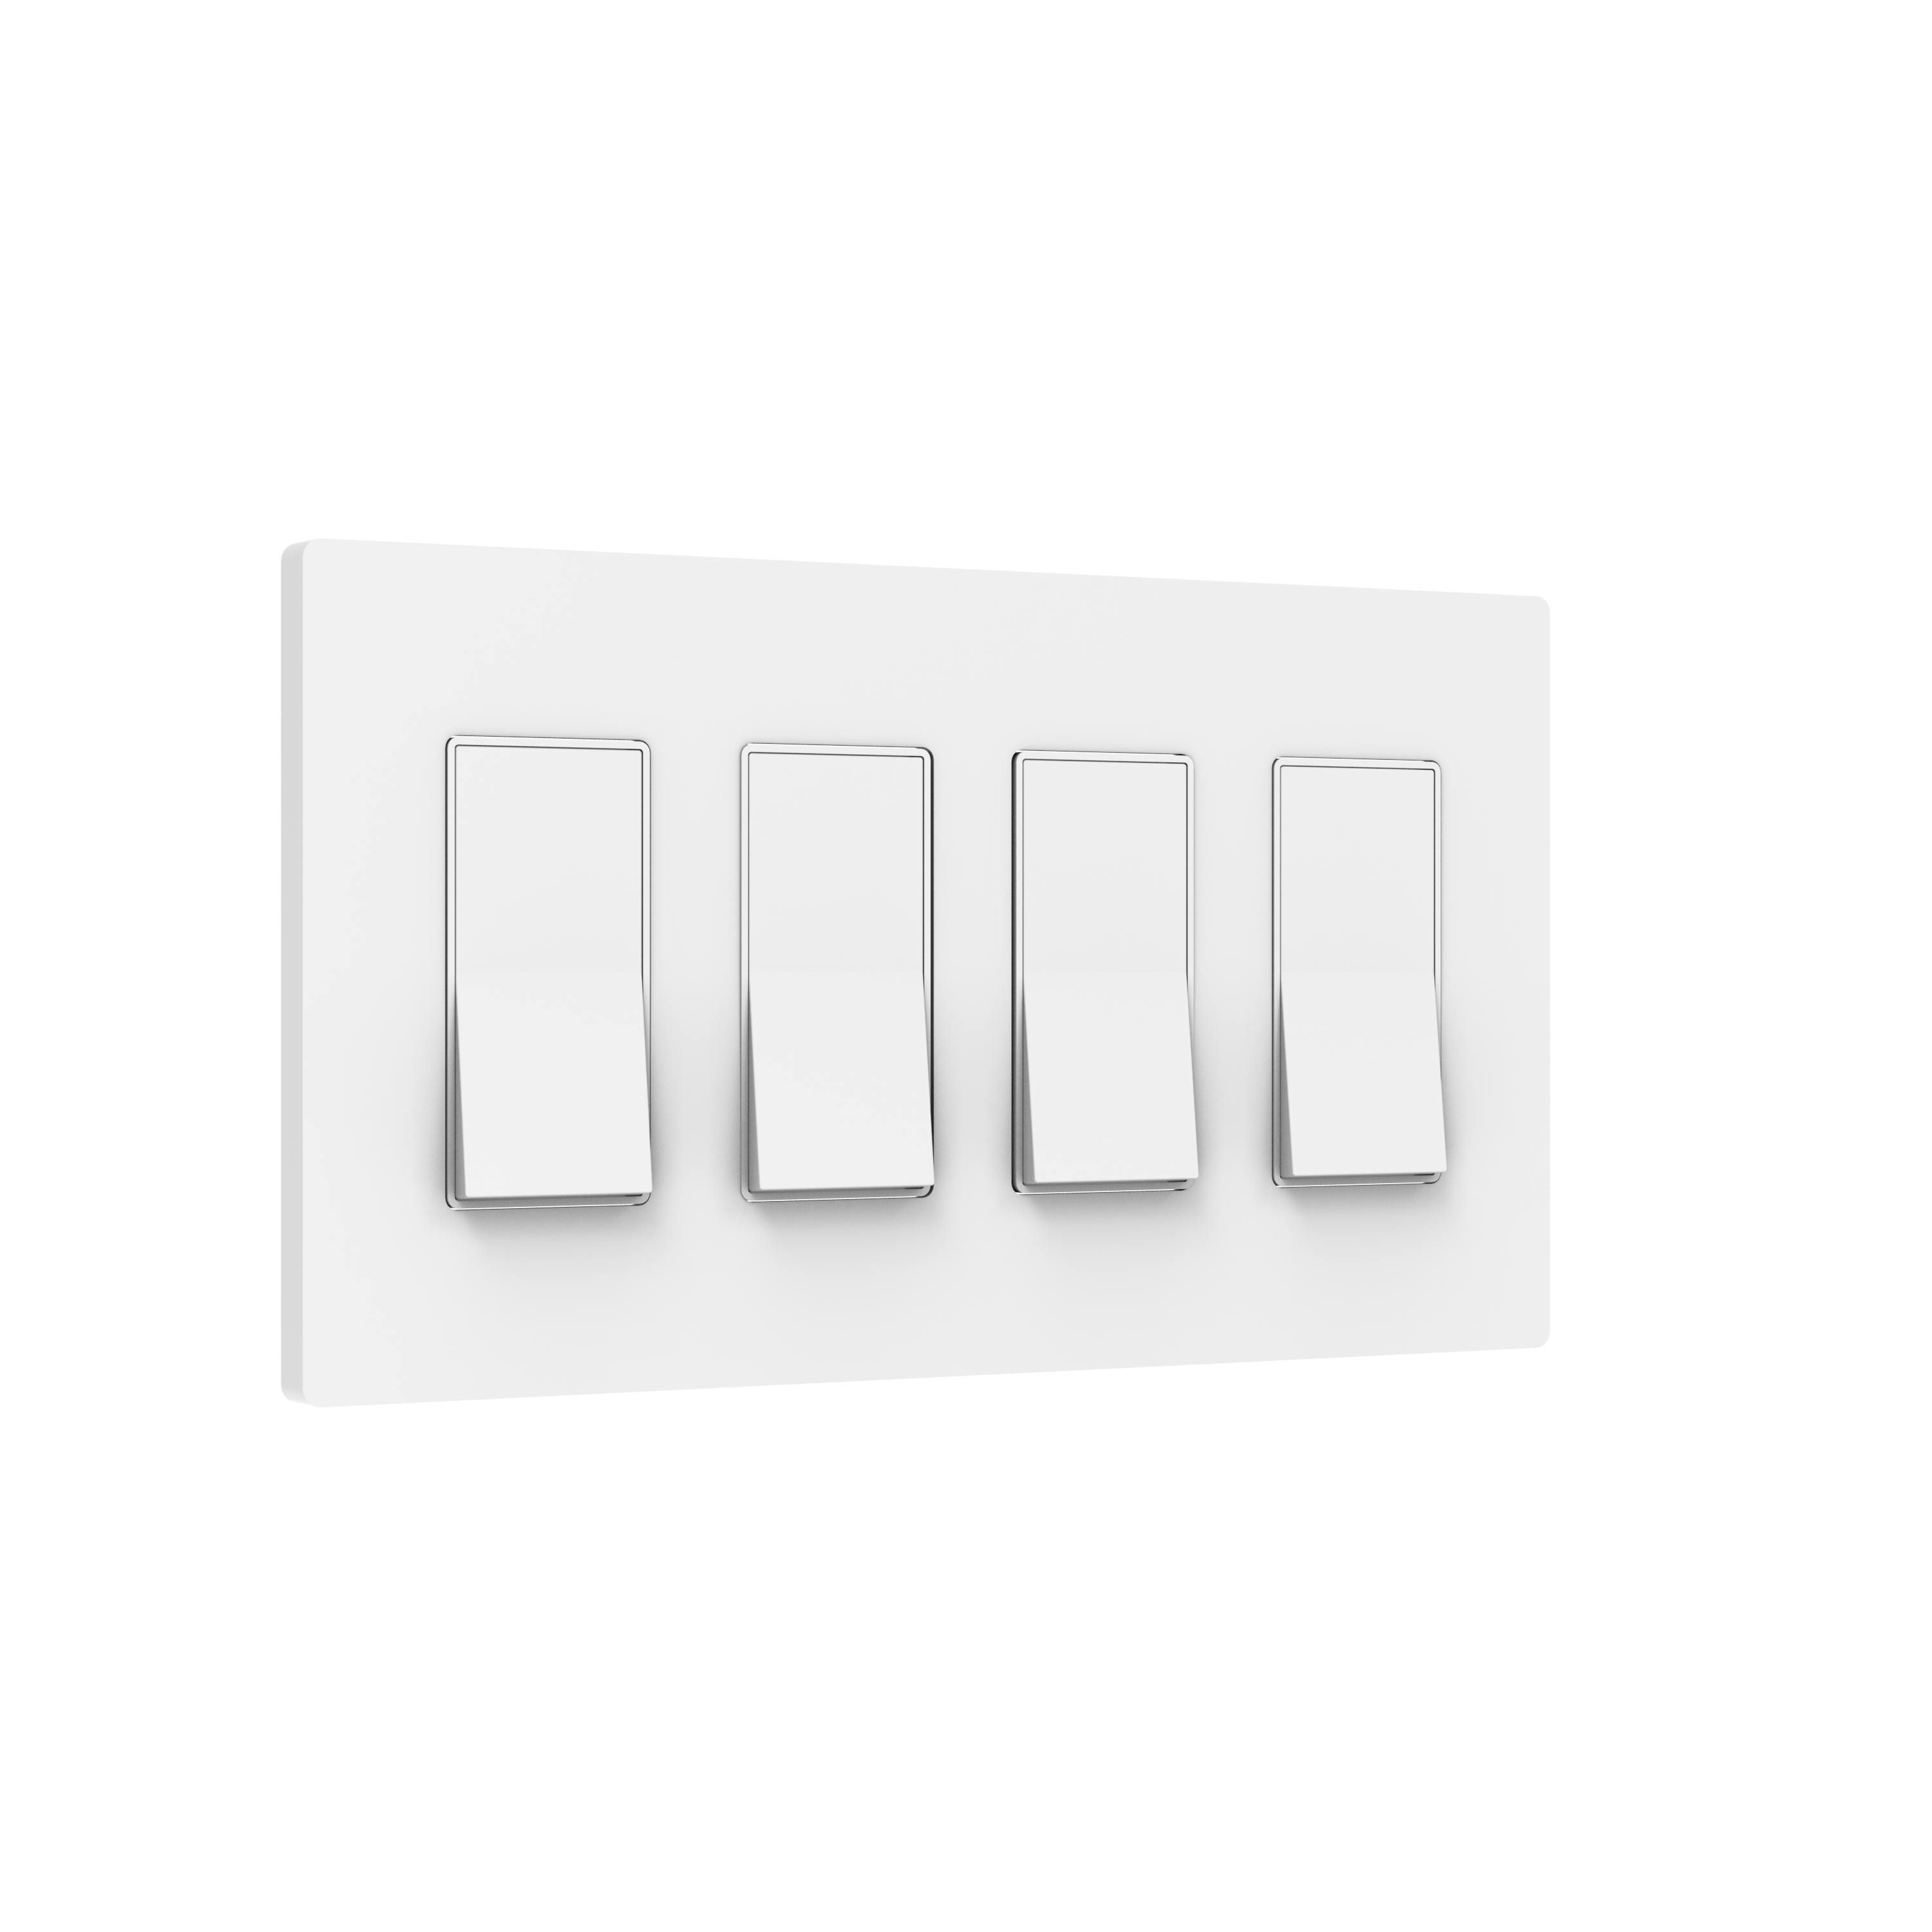 TAN-D0070-4W-S 4-Gang Decorator Screwless Wall Plate - White